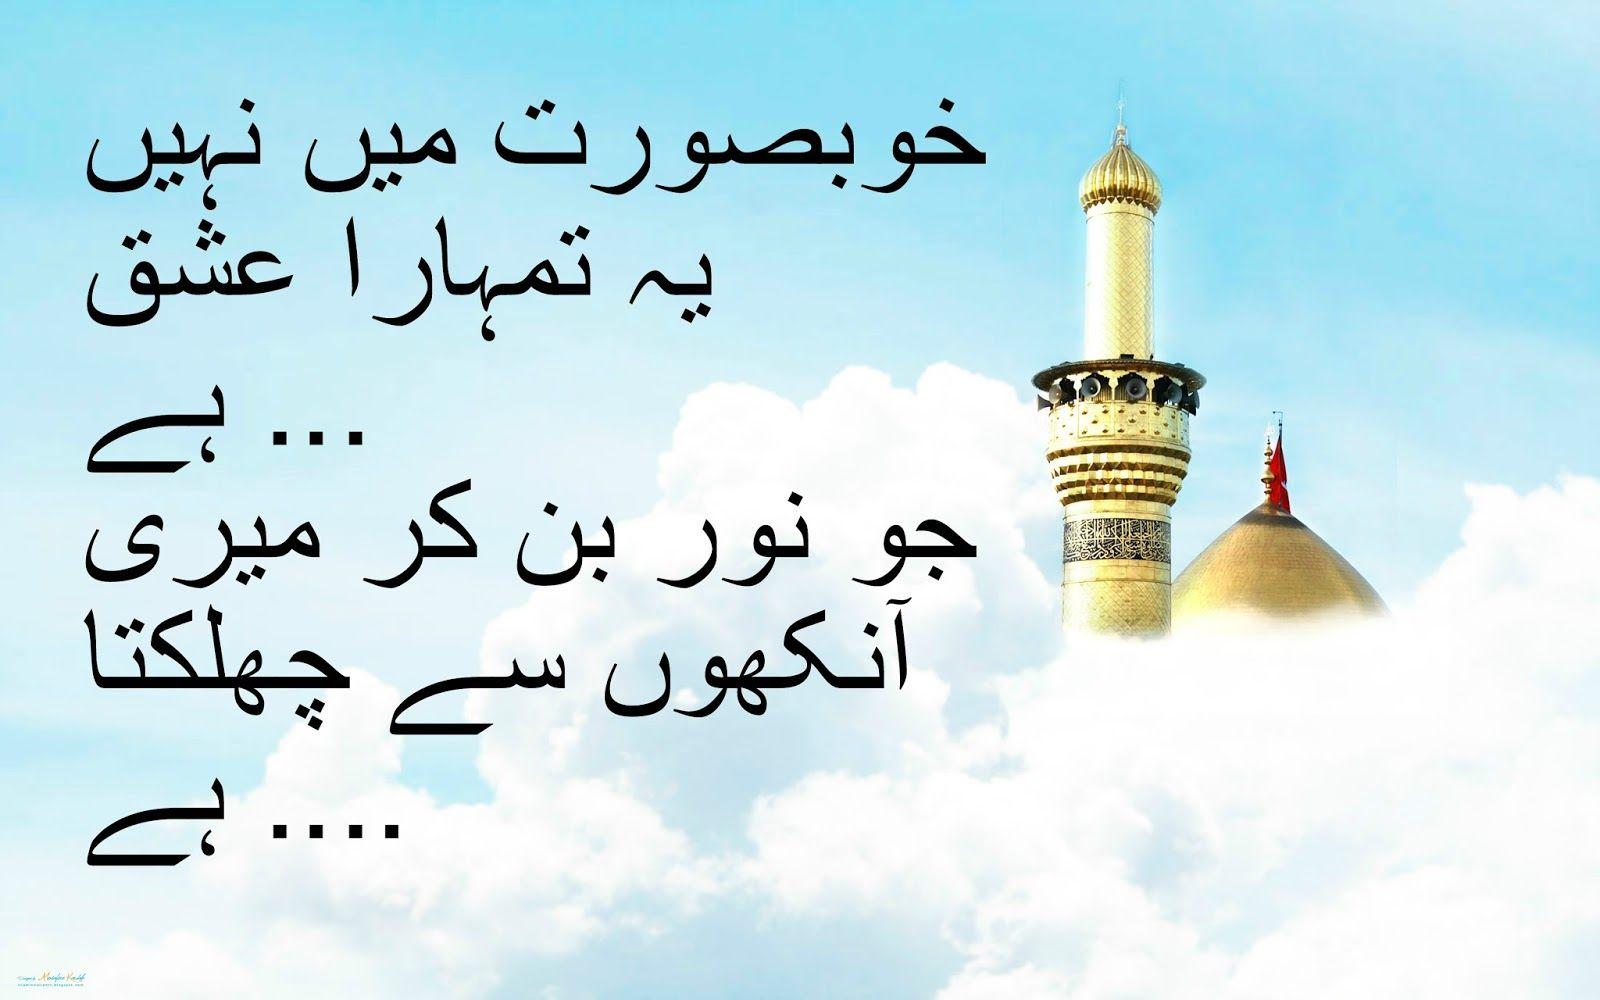 Urdu shayari images Archives - Zindagi Tere Naam